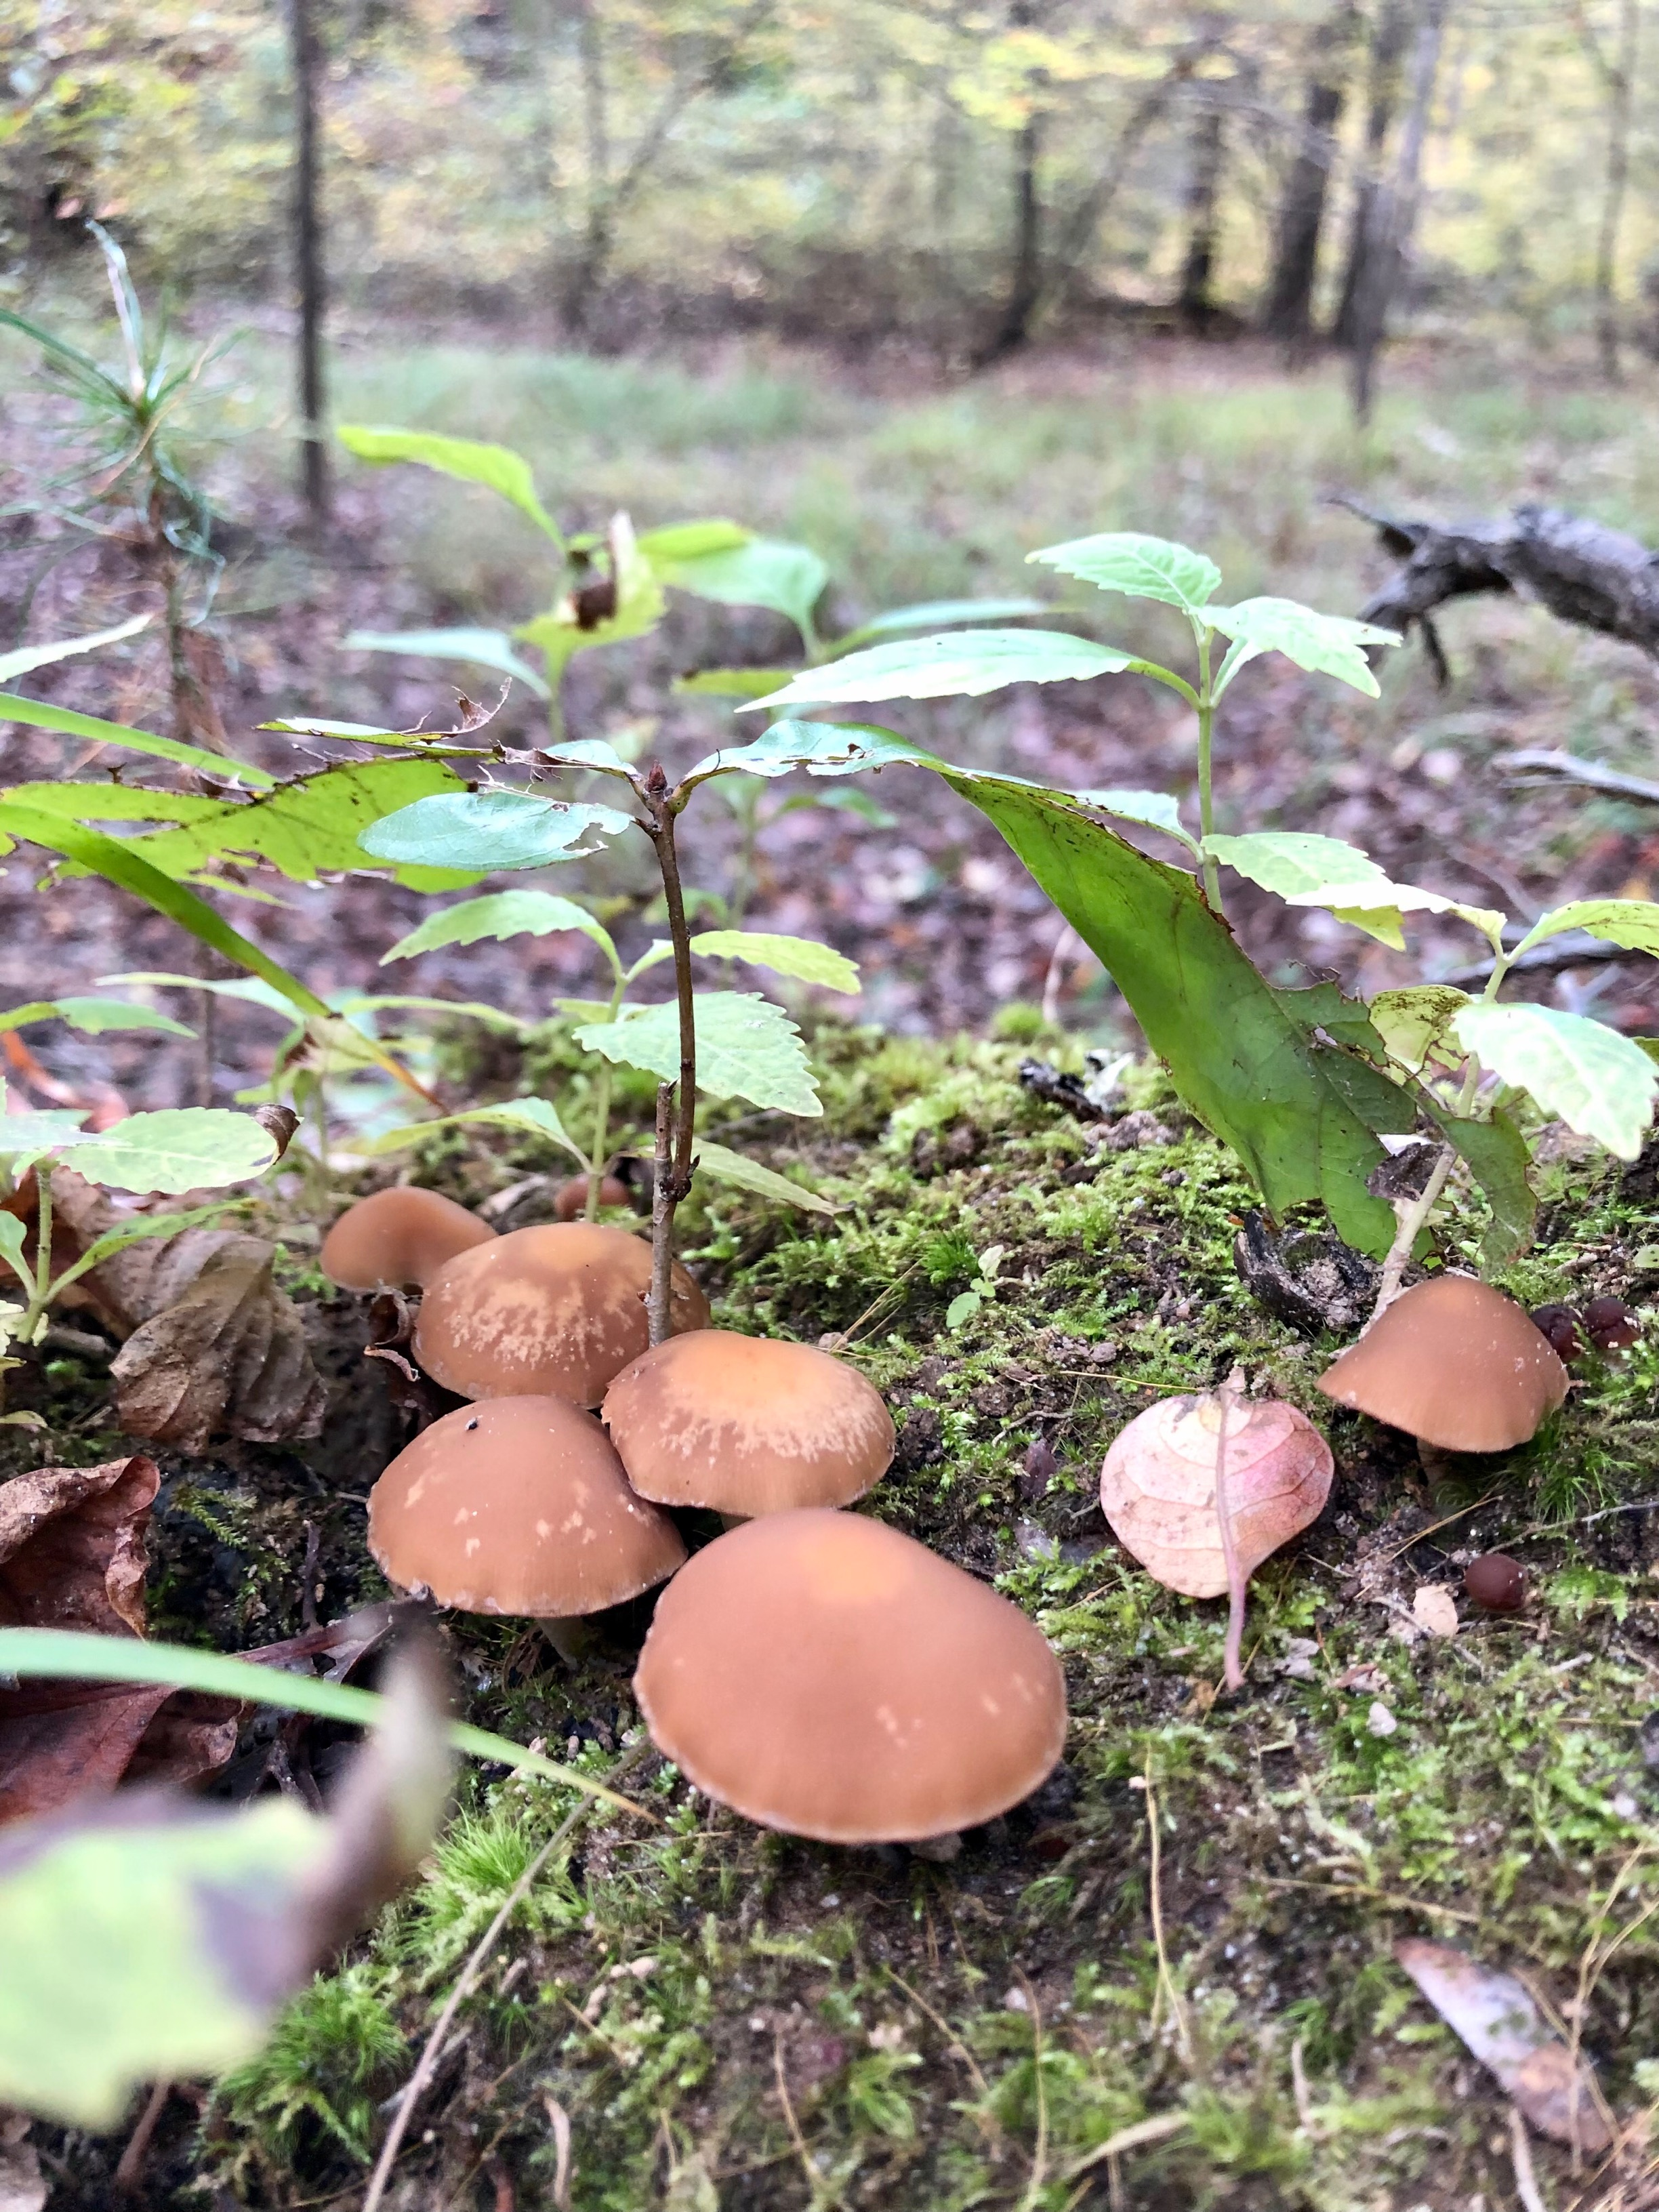 Small brown mushrooms.